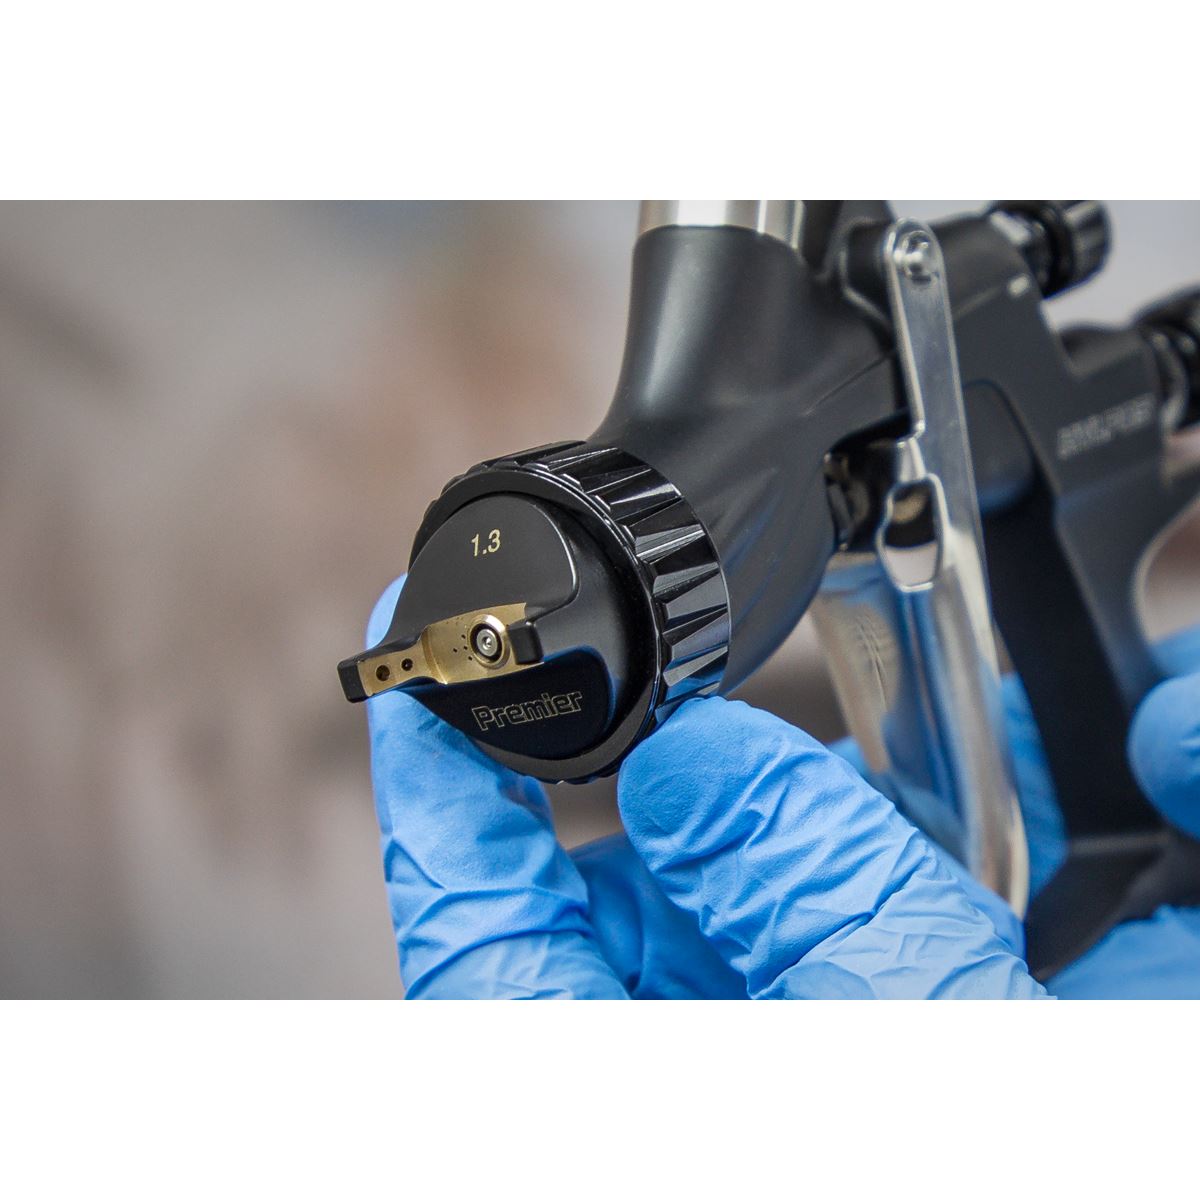 Sealey Premier HVLP Gravity Feed Spray Gun 1.3mm Set-Up